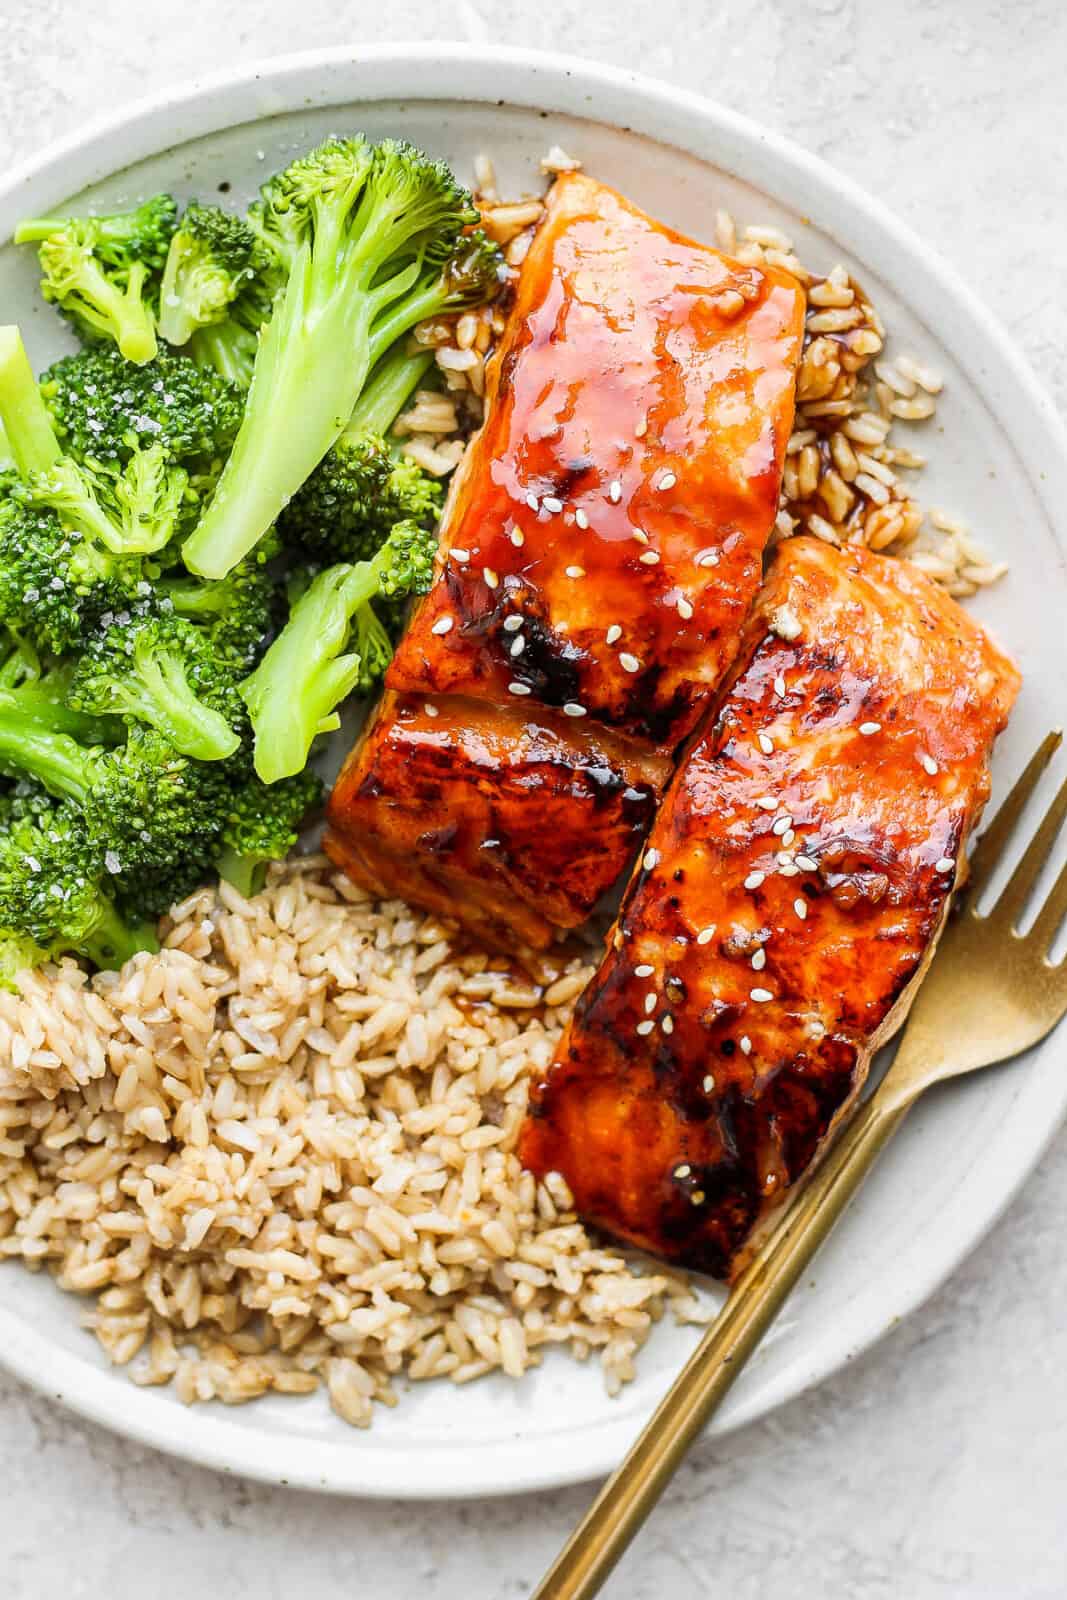 A plate of teriyaki salmon with rice, broccoli, and a fork.